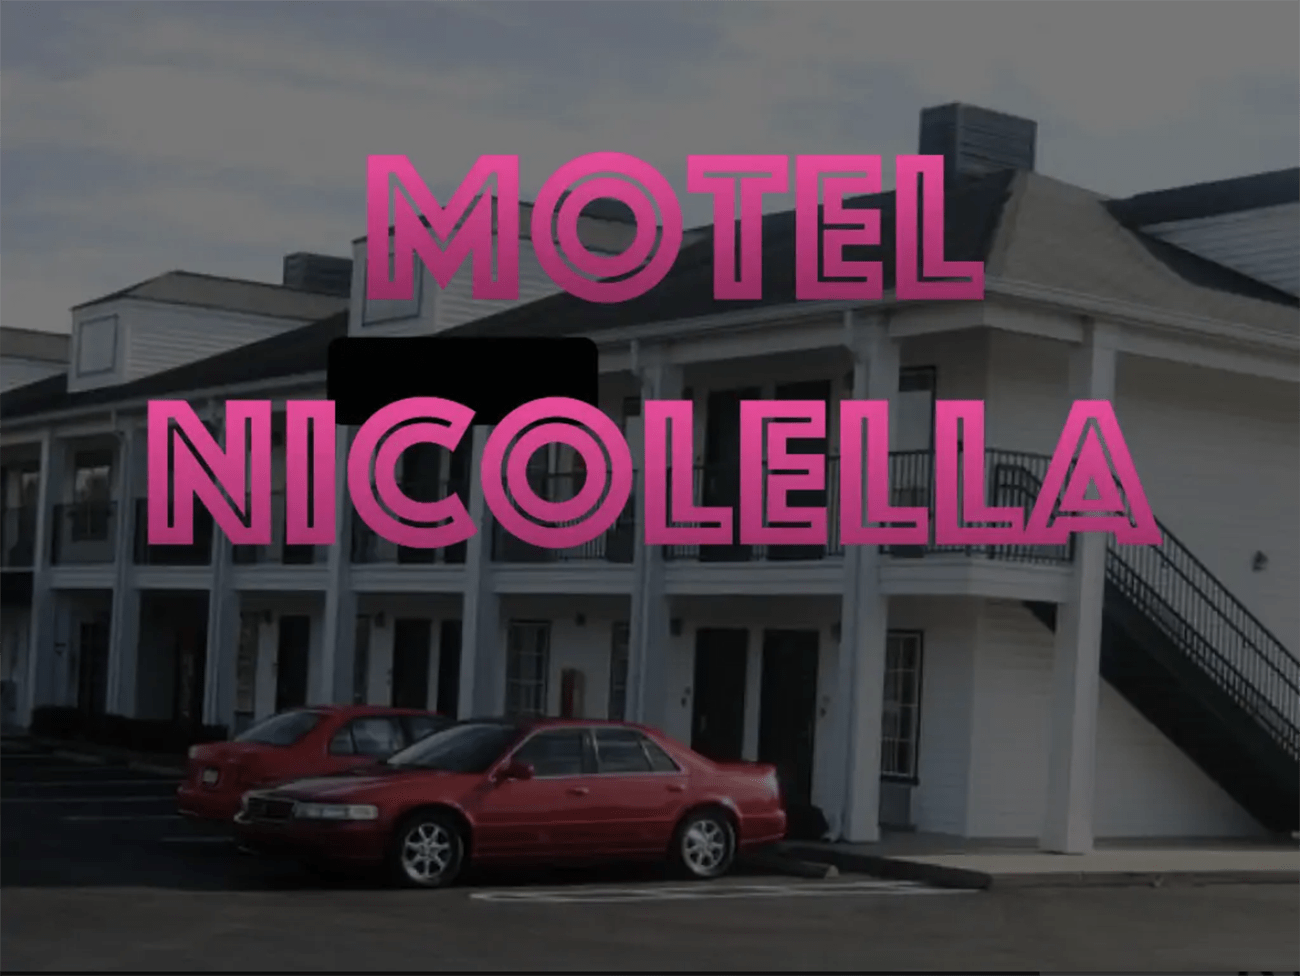 Motel Nicolella Art Rights